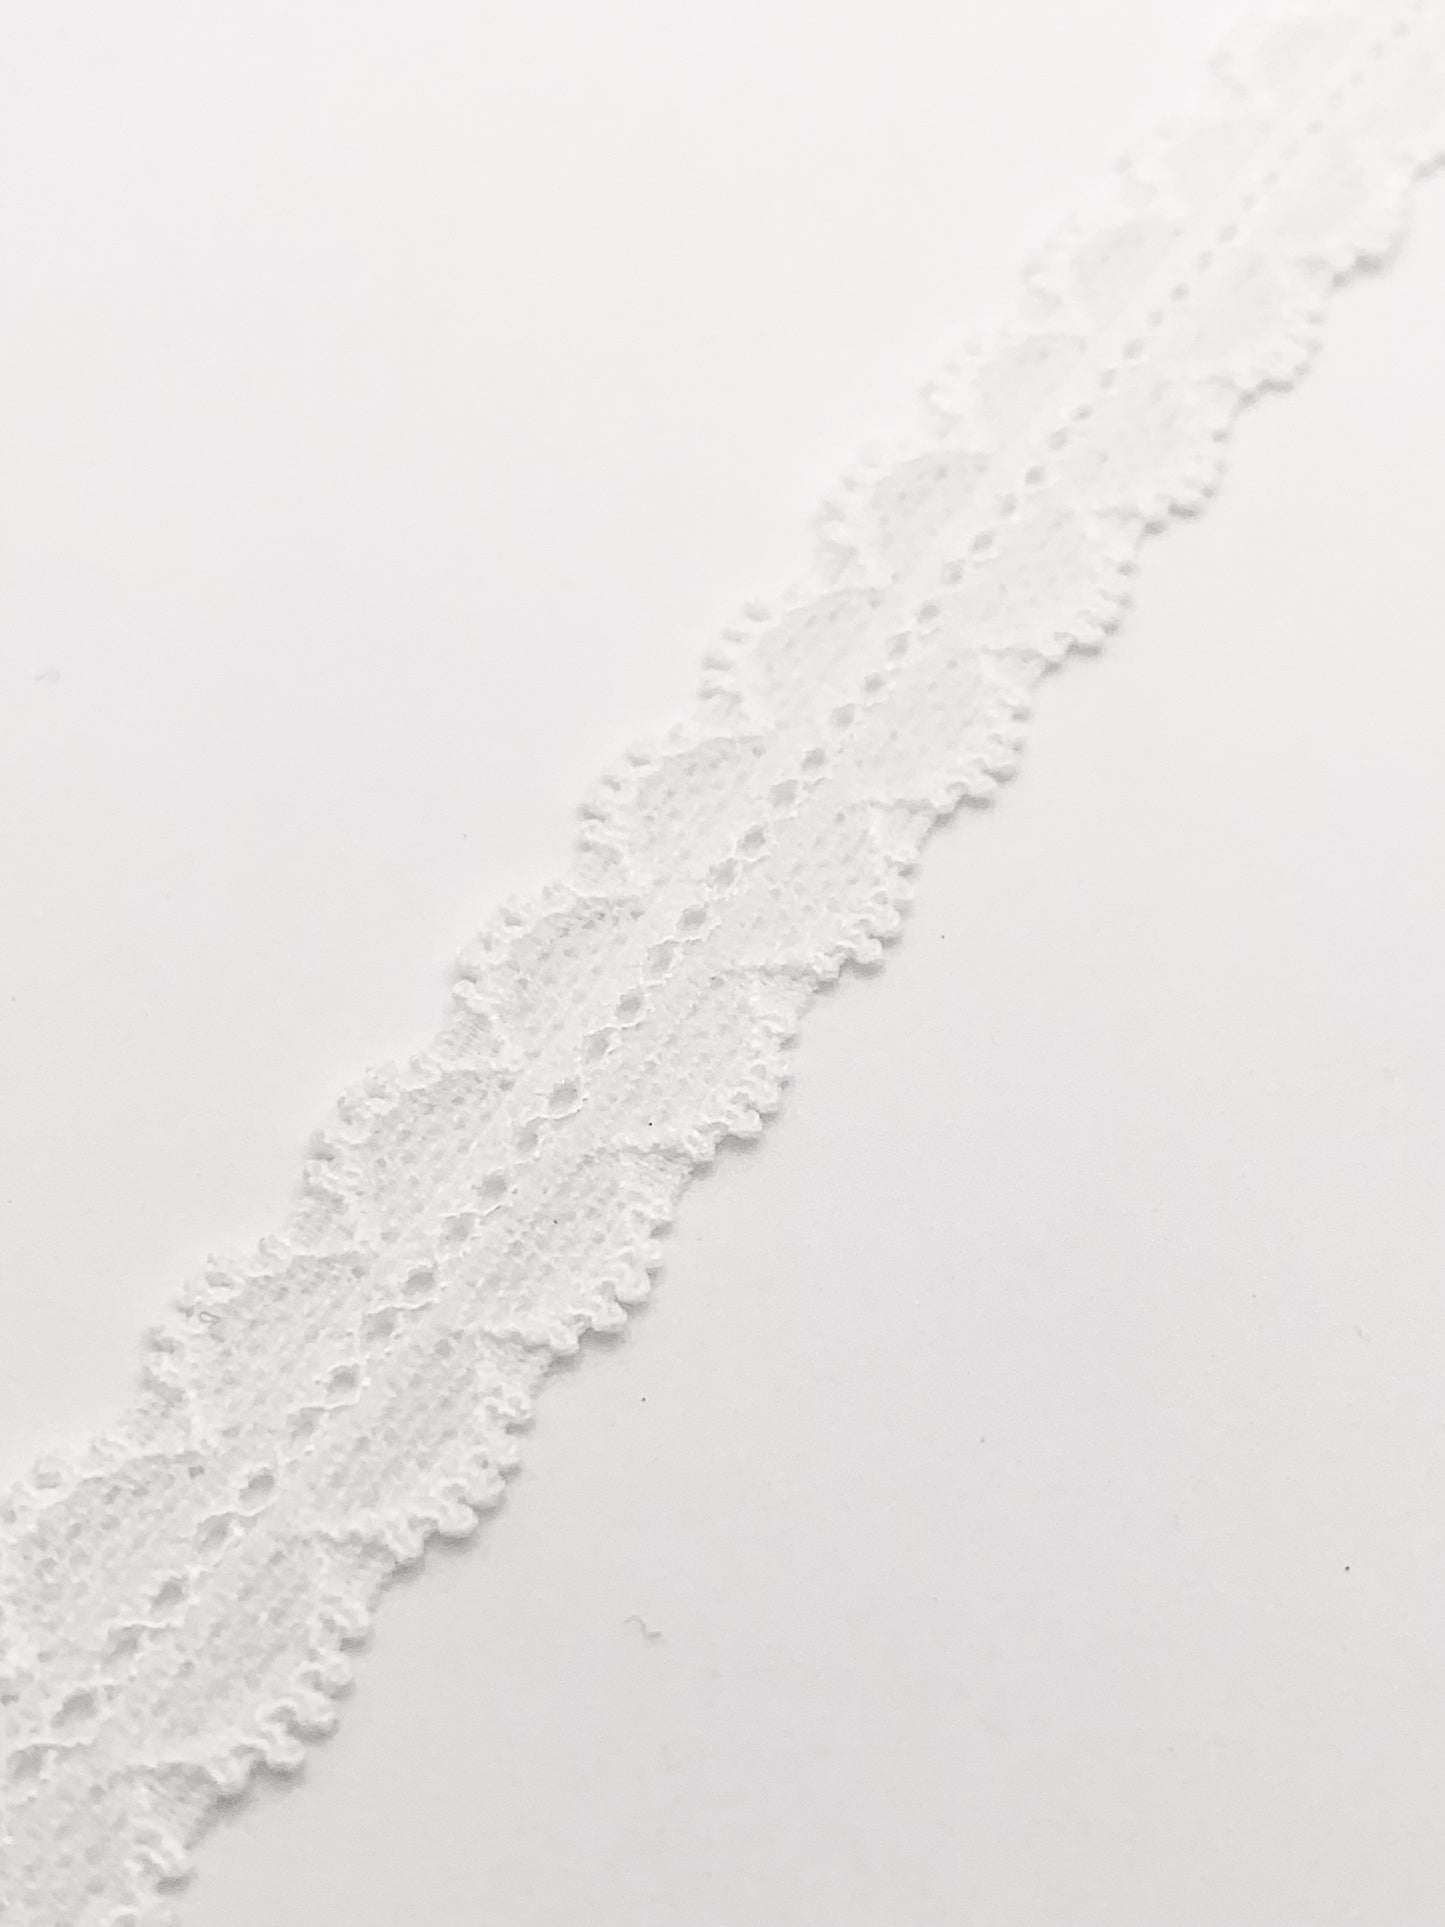 Narrow Stretch Lace Trim in White | 1.5cm Wide | Bra Making Supplies | Price per metre